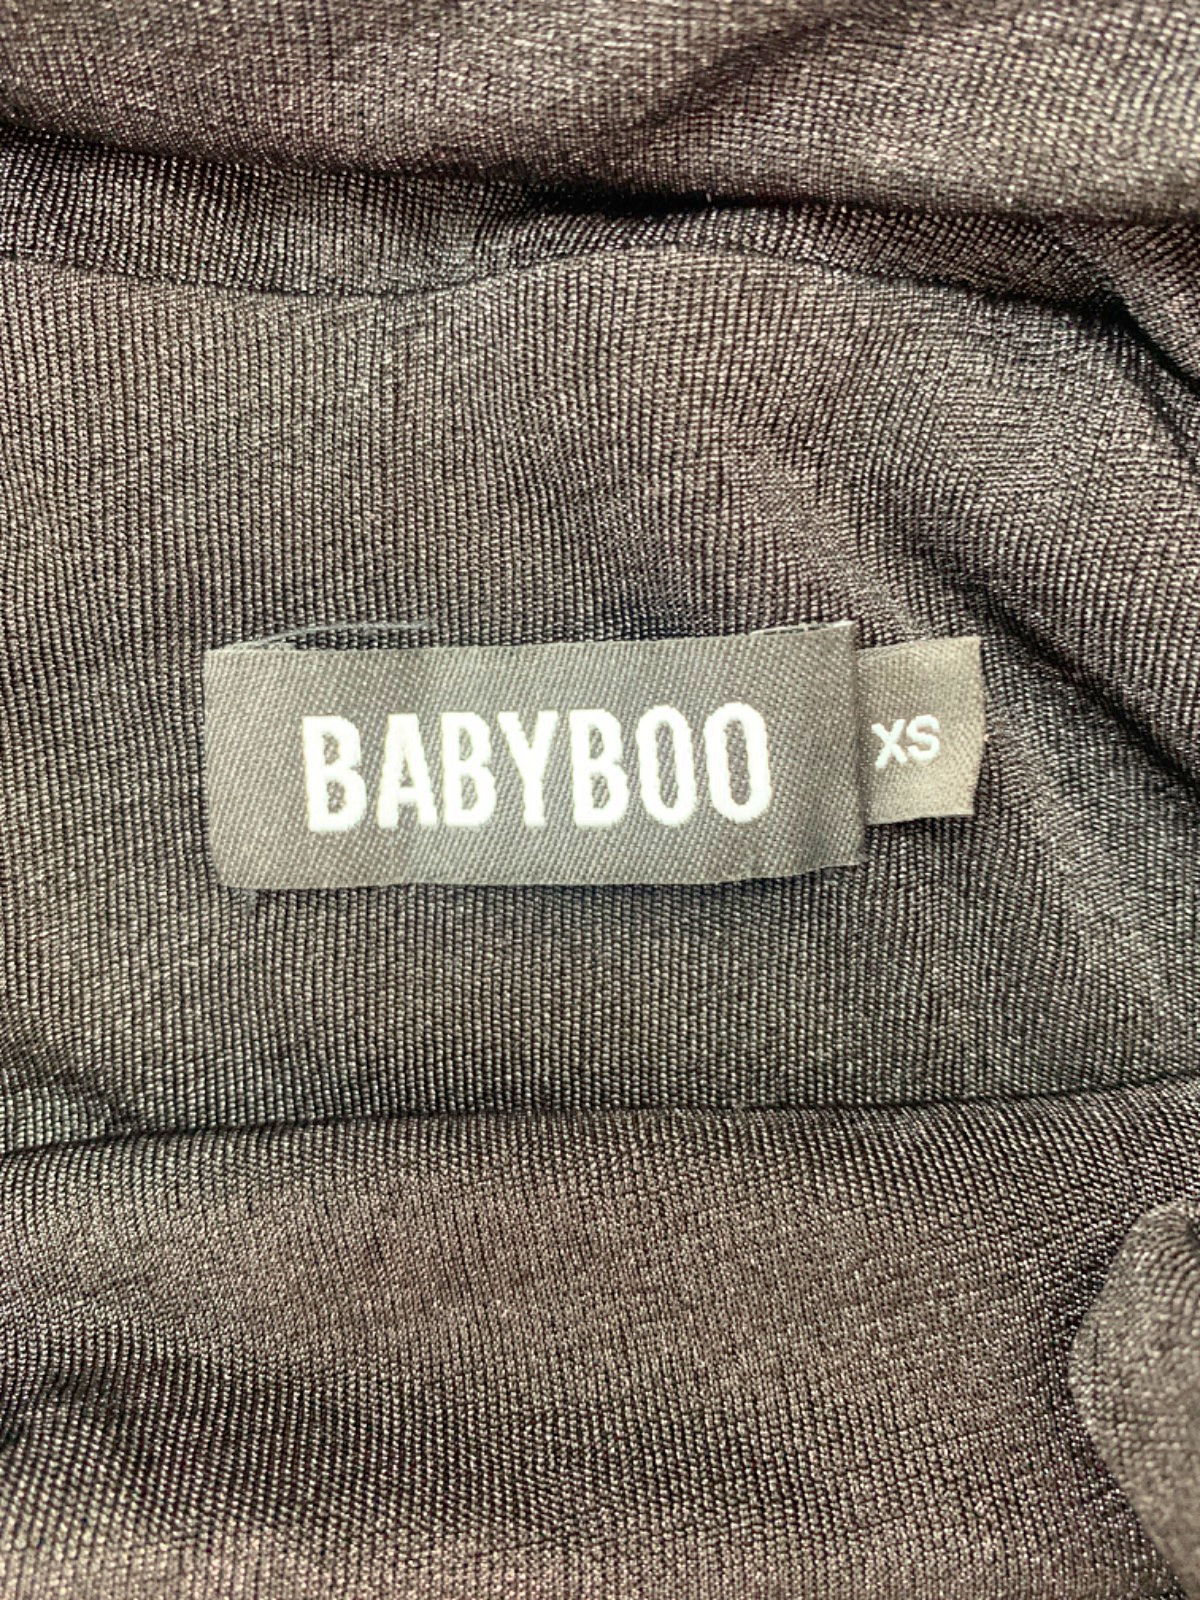 Babyboo Black Backless Midi Dress XS